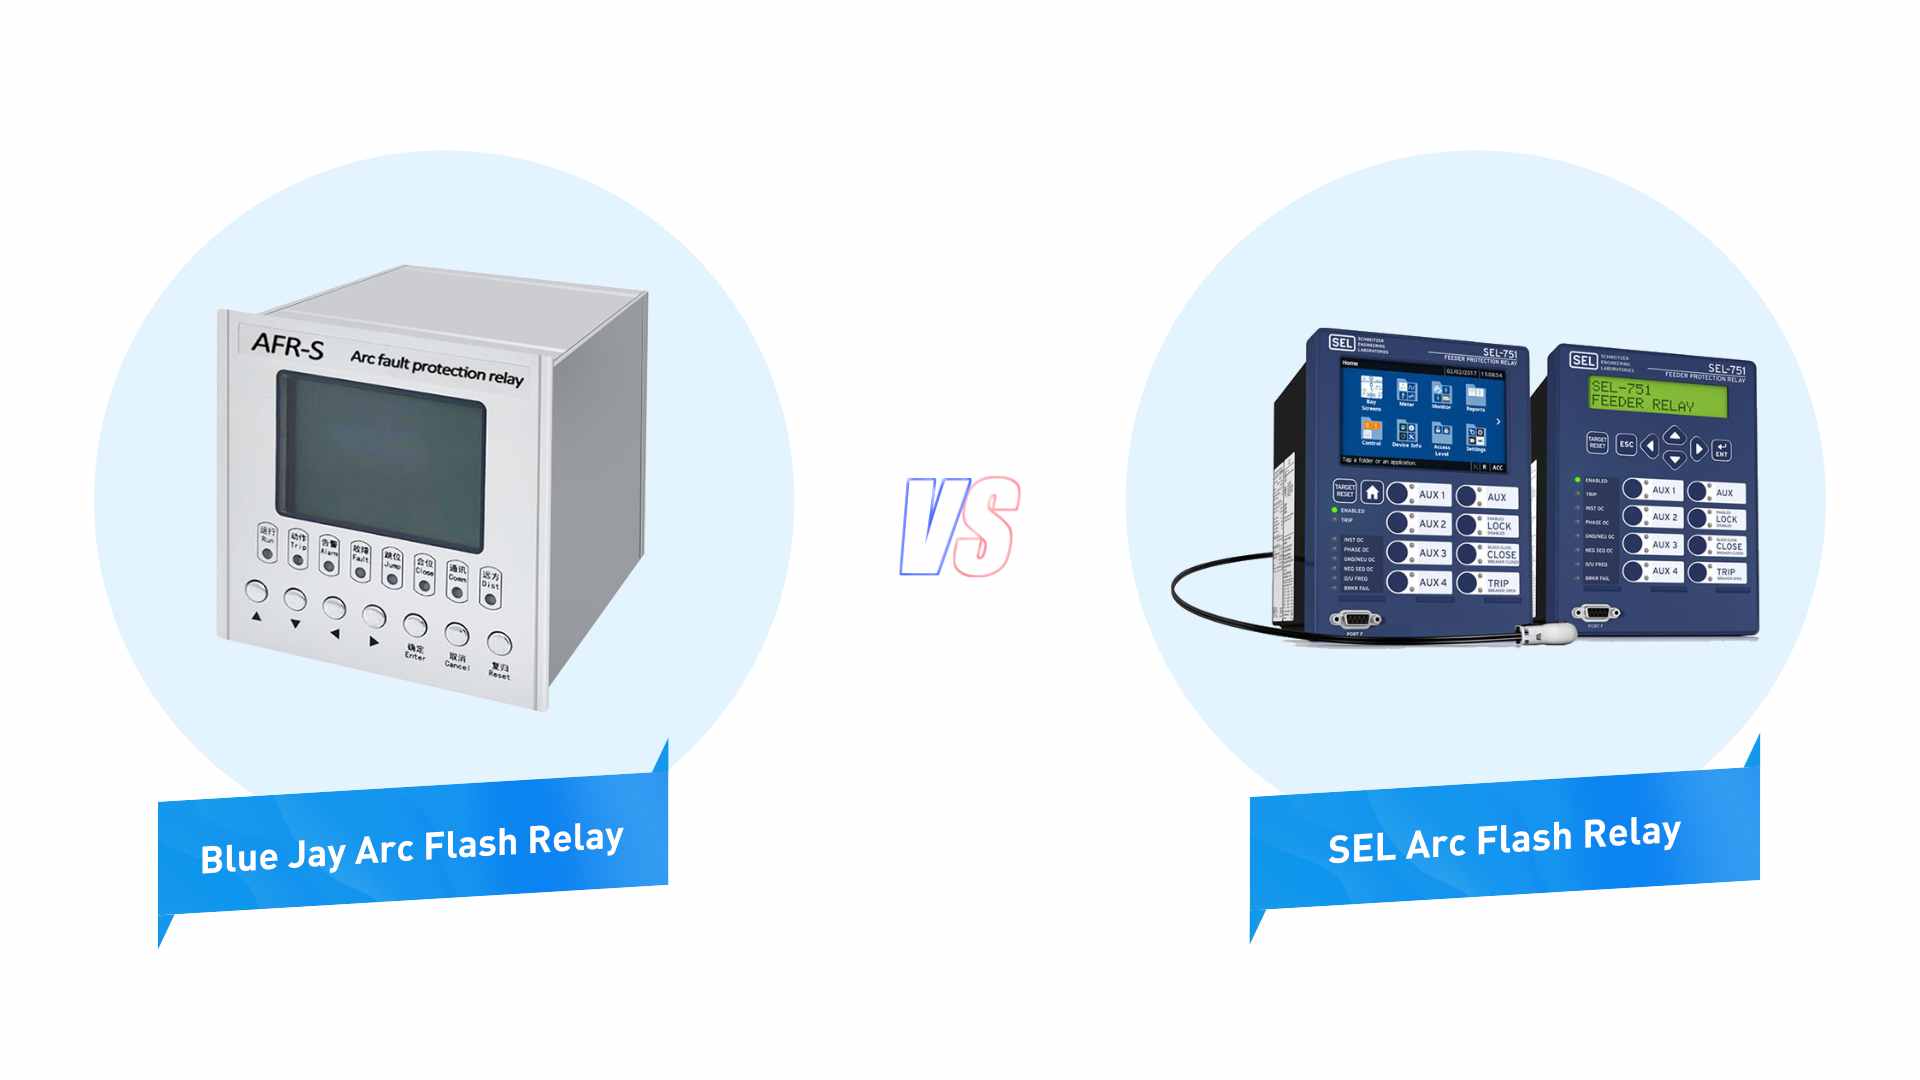 blue jay vs sel arc flash relay